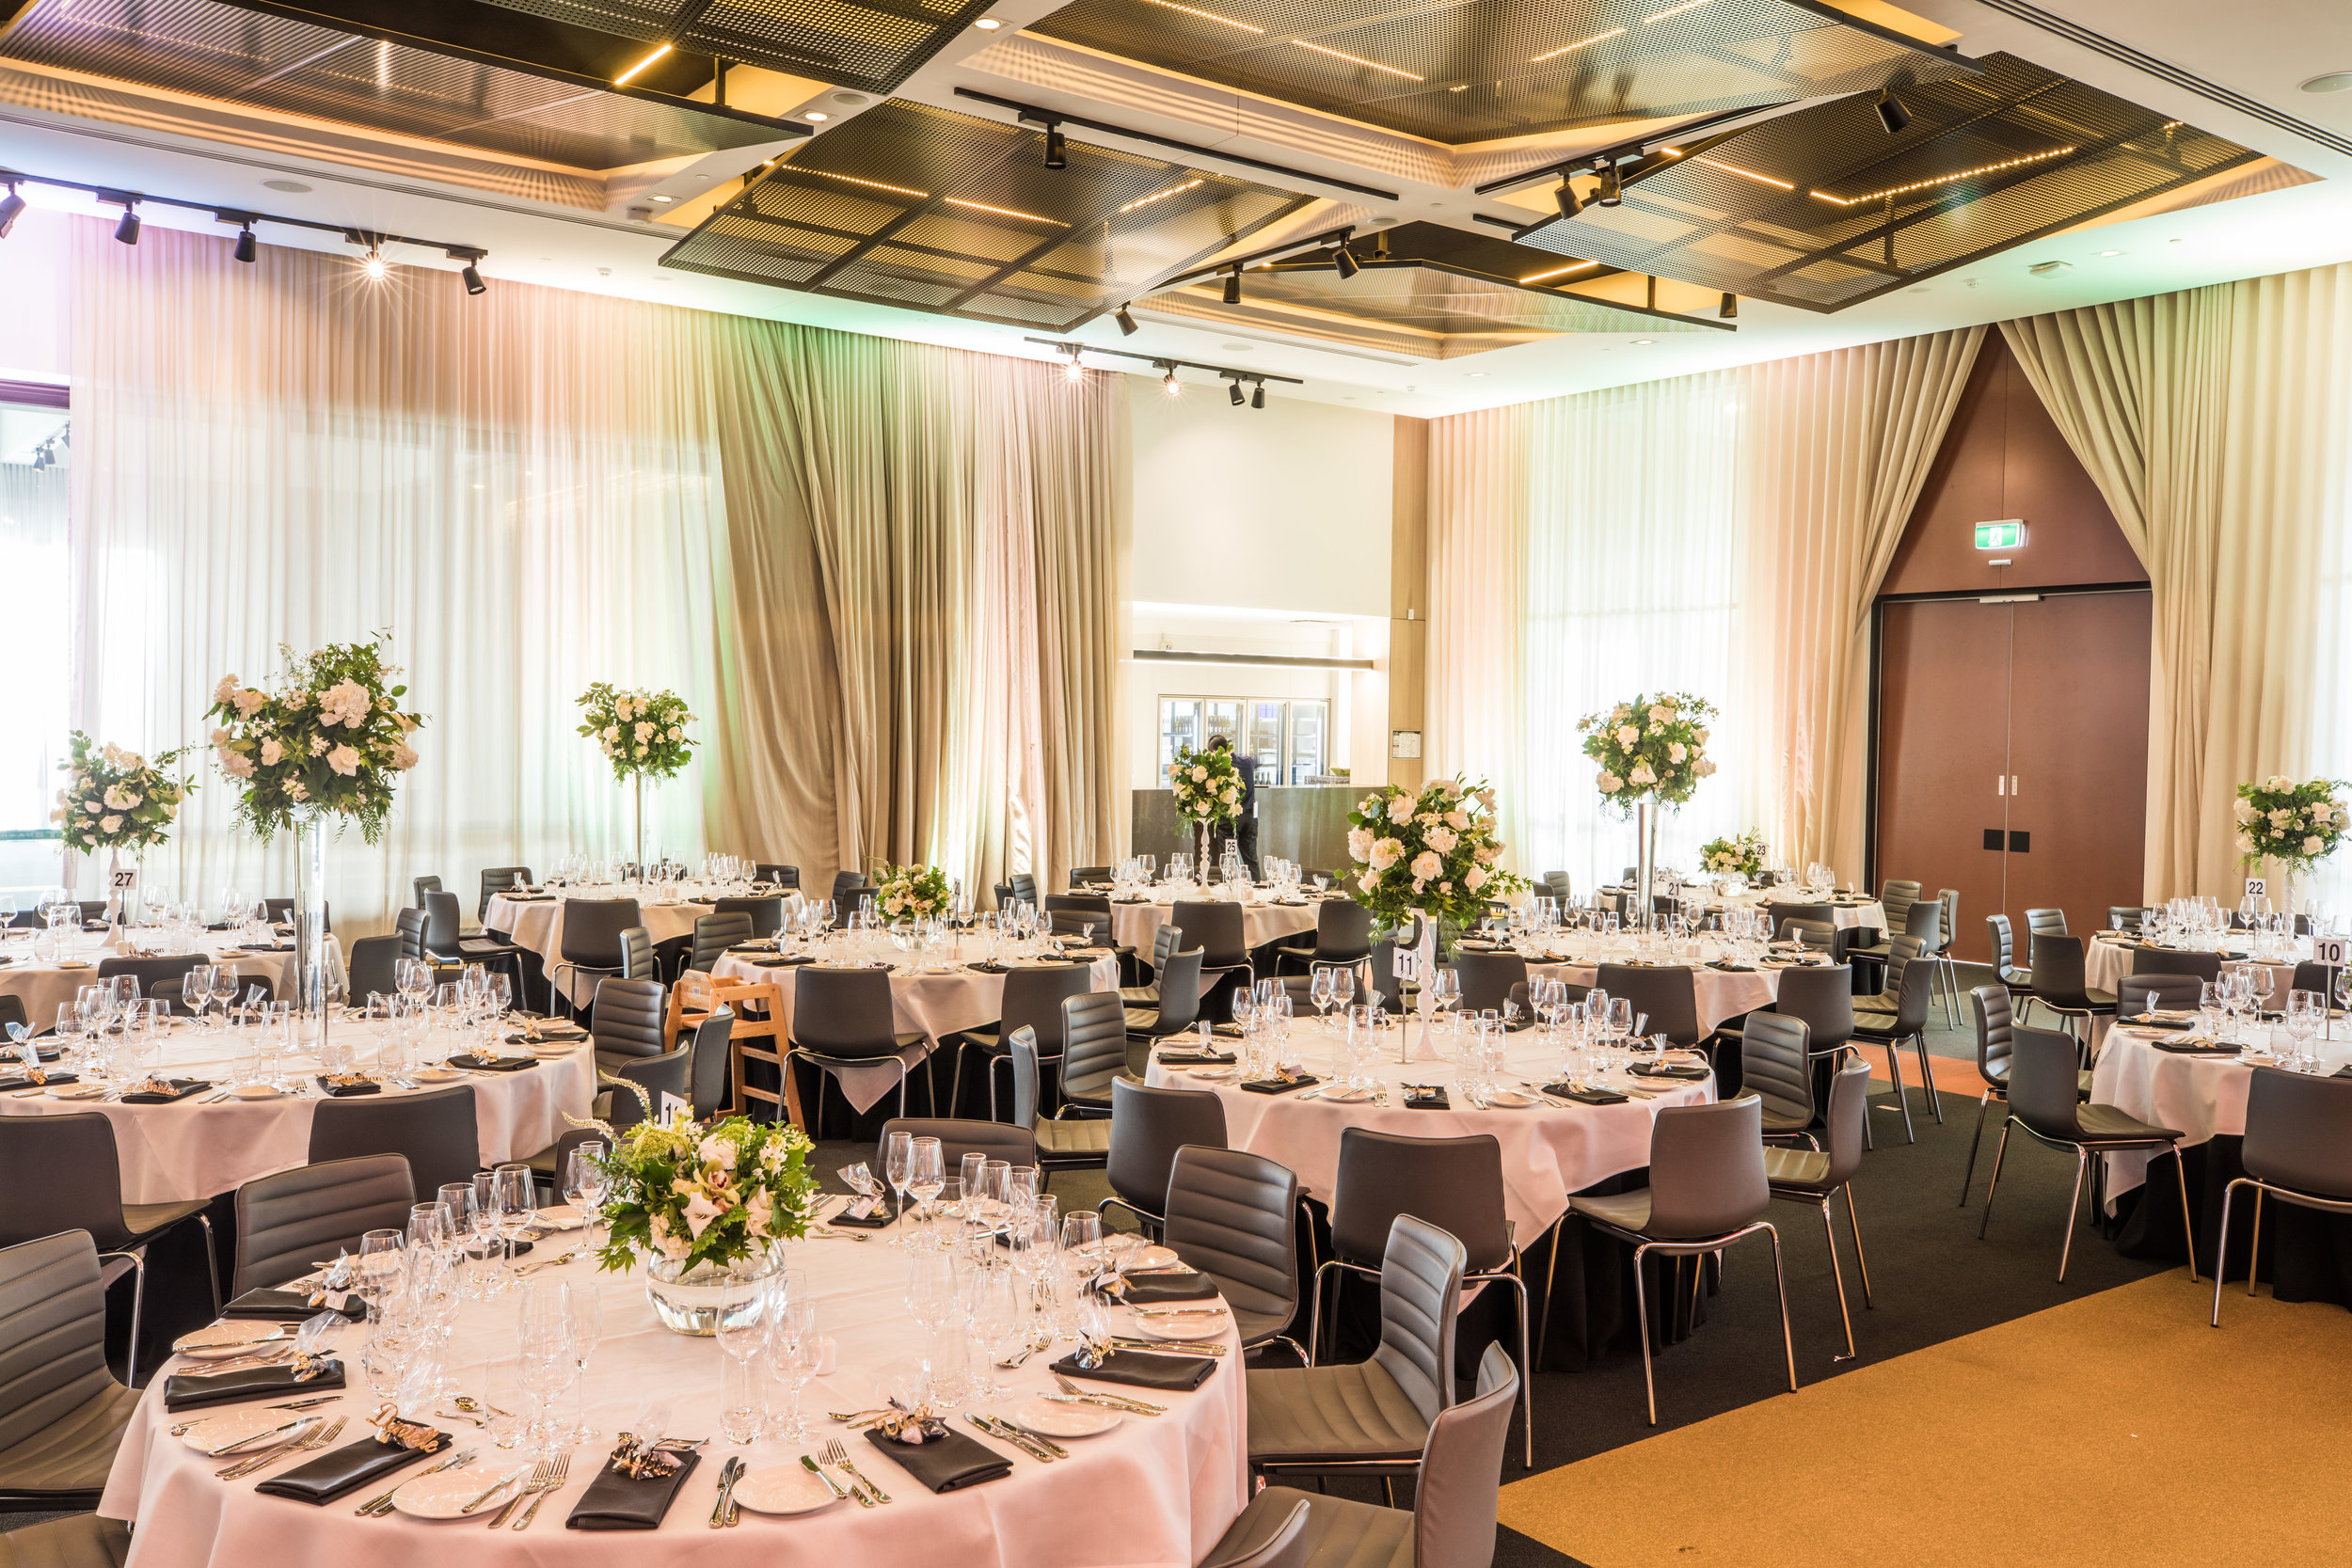 The Australian Rooms at Hyatt Place Melbourne wedding venue